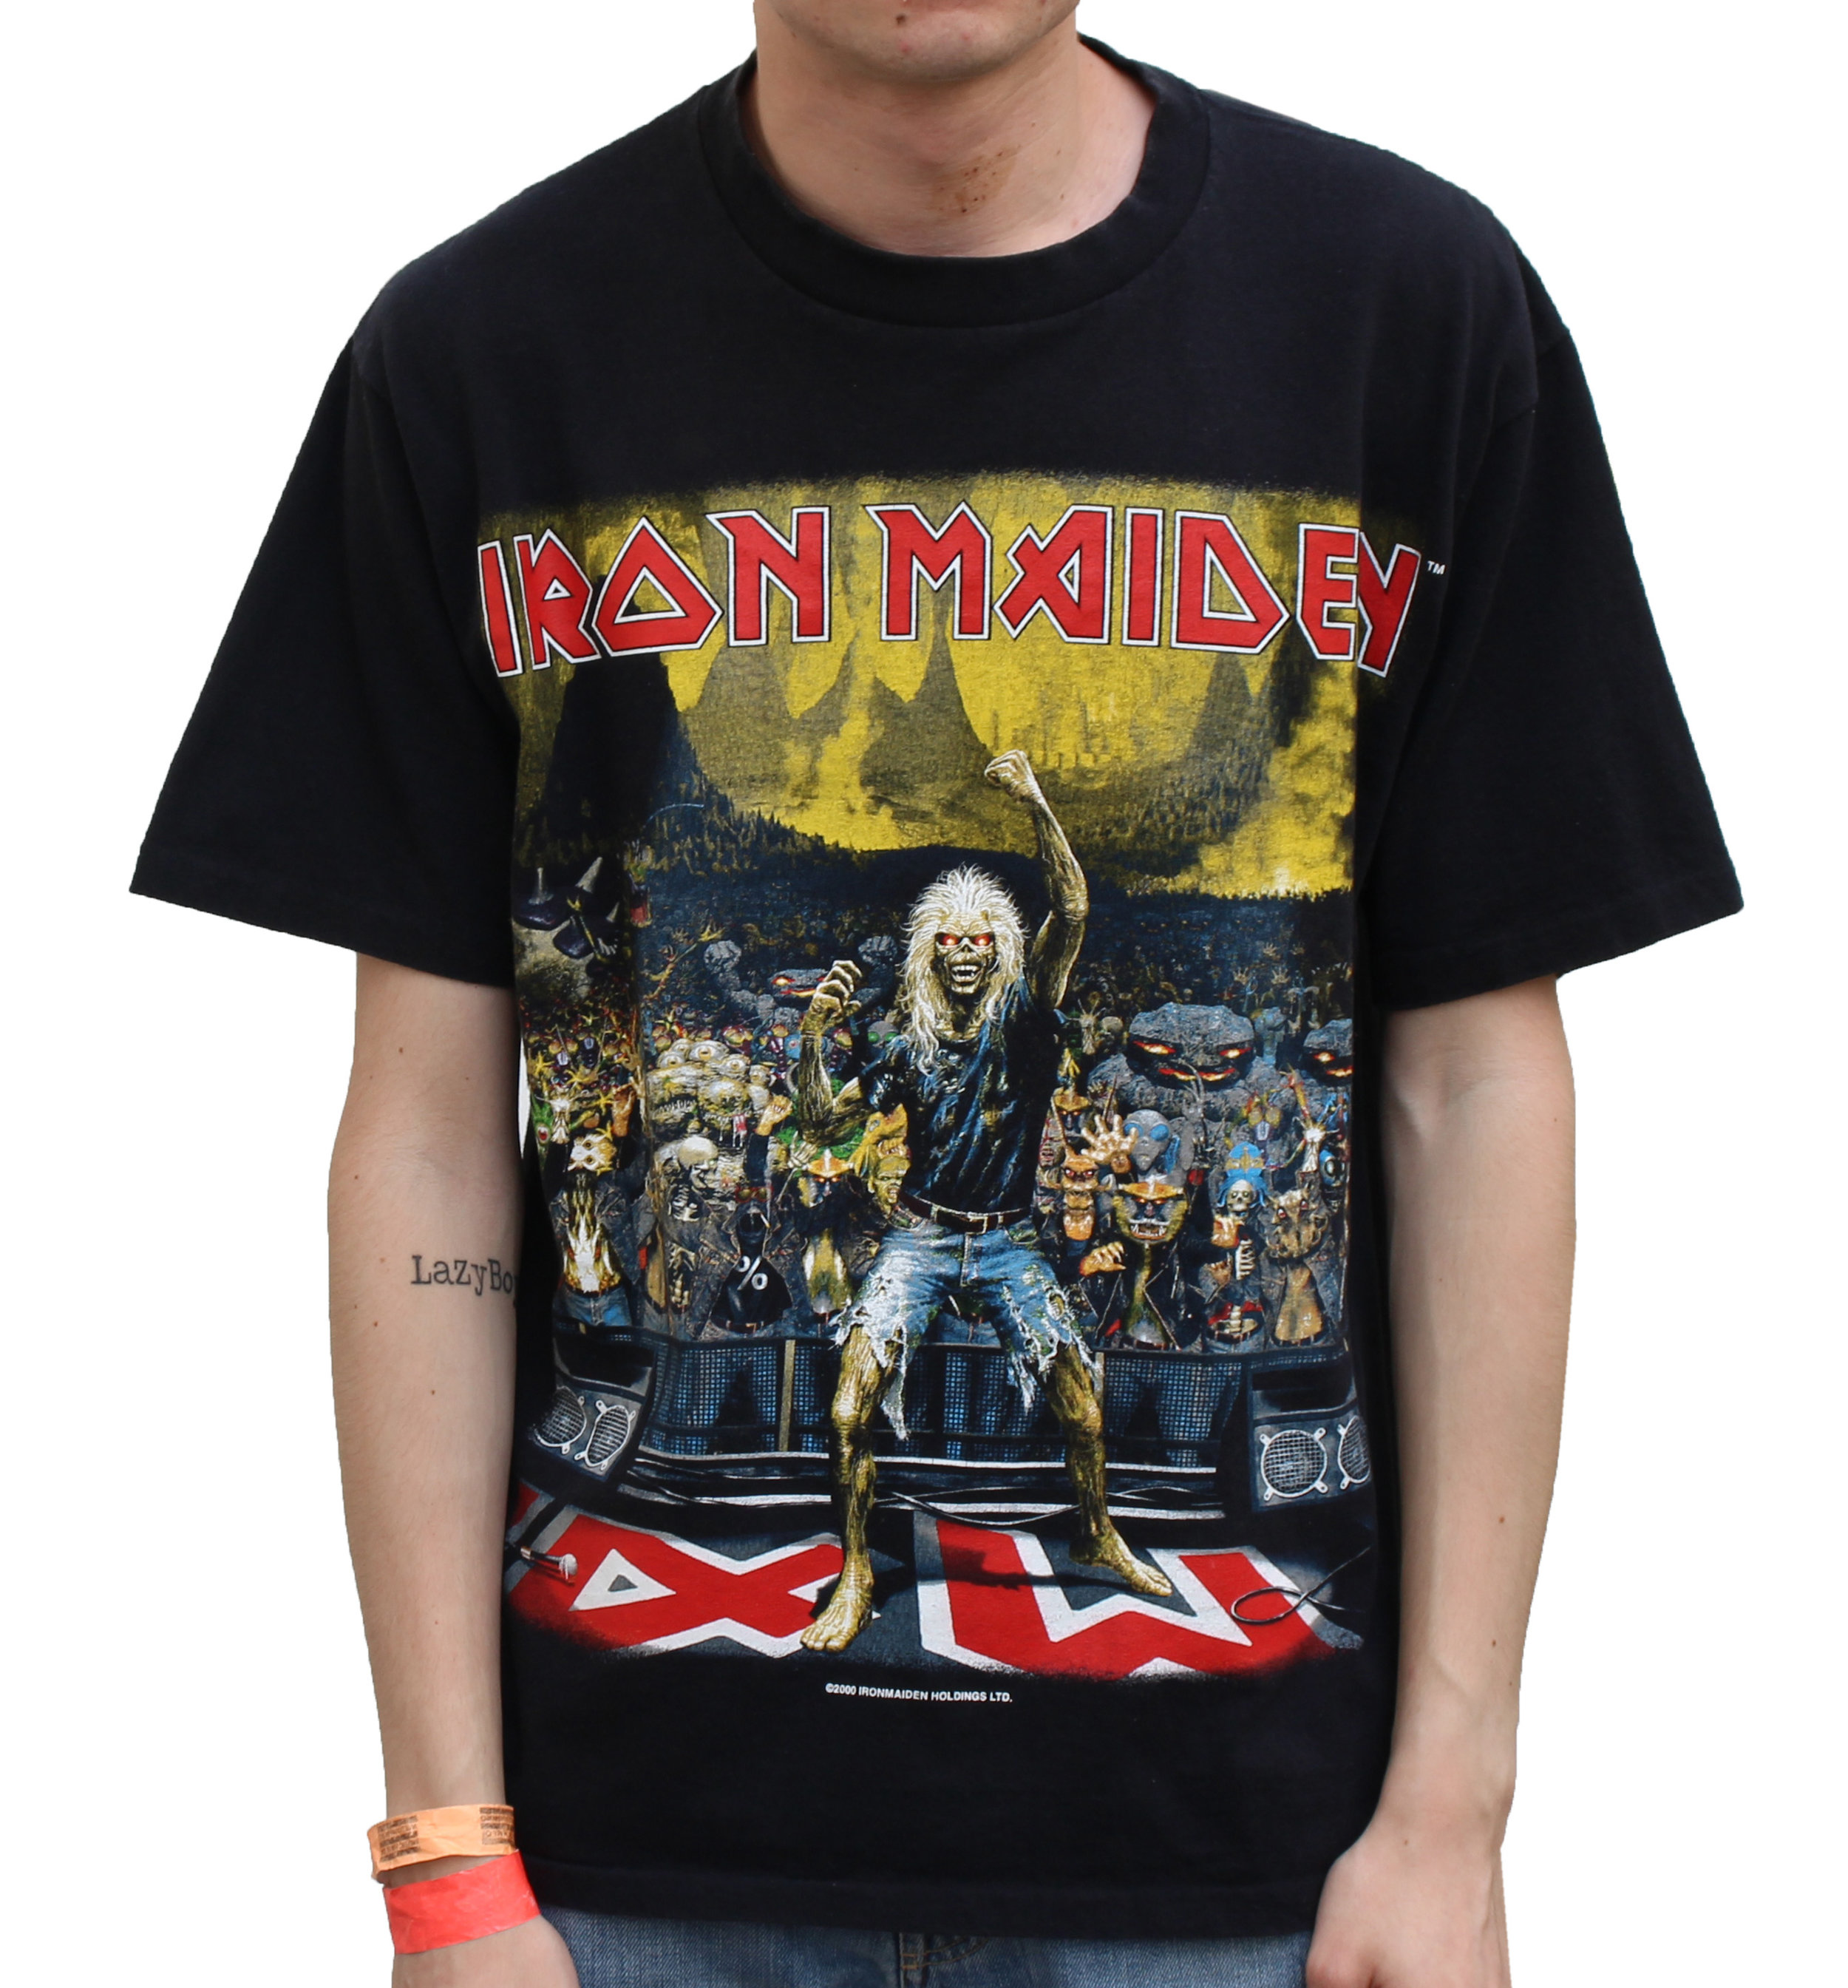 00's Iron Maiden Girl T-shirt